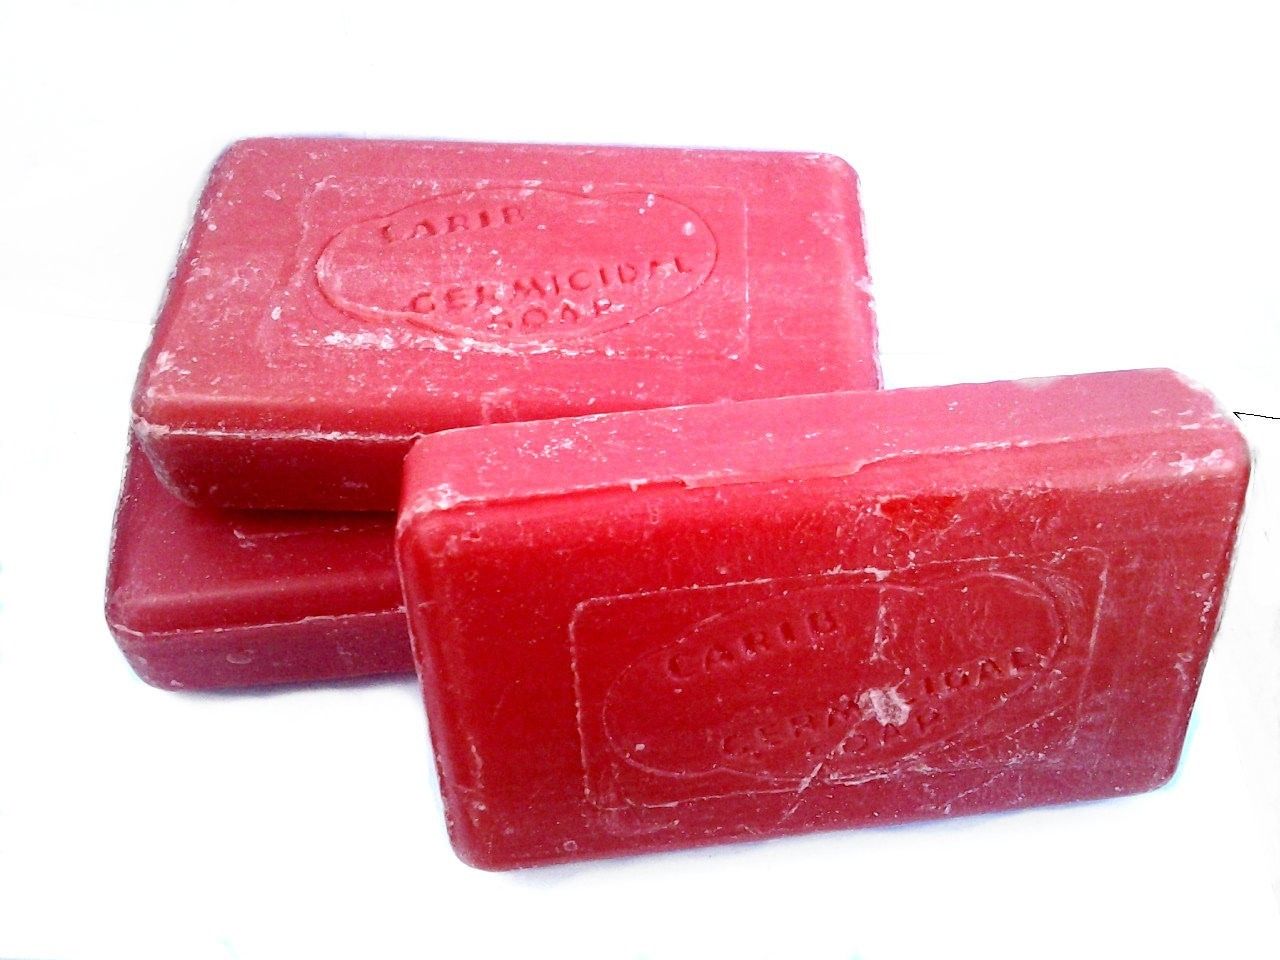 6 X Carib Carbolic Germicidal Bath soap mild disinfectant Antibacterial 6 Bars